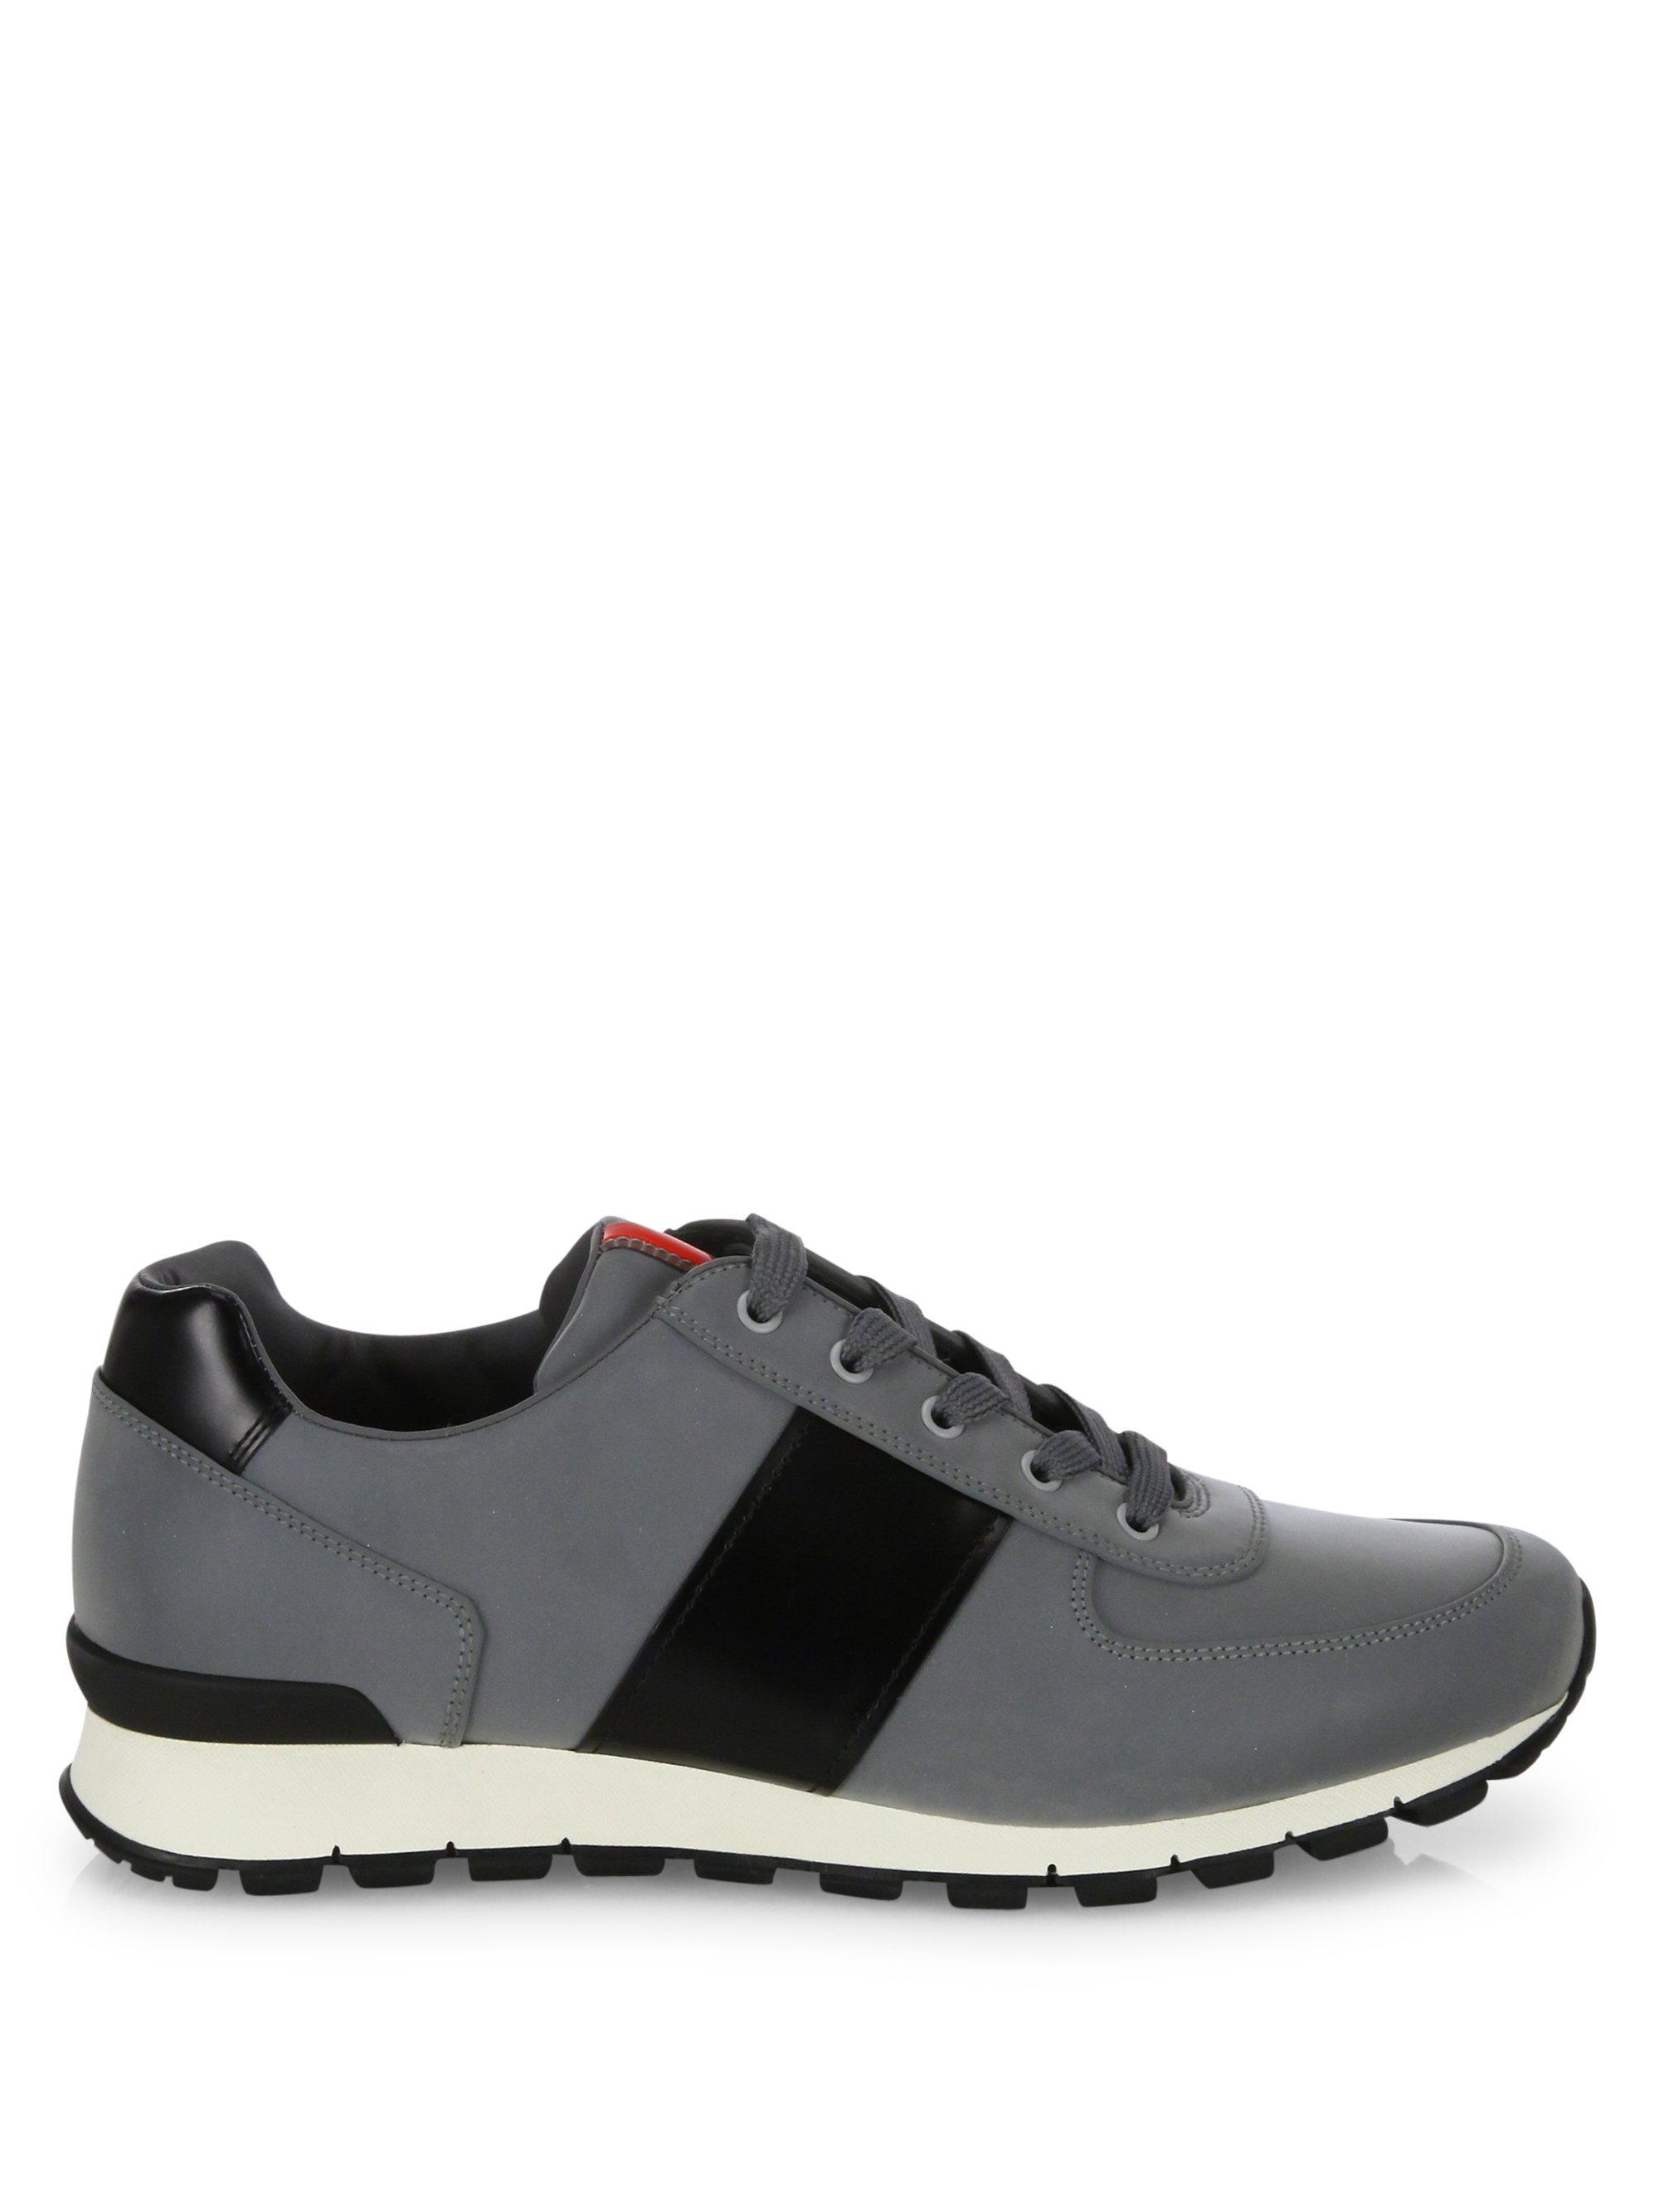 Lyst - Prada Reflective Leather & Nylon Running Sneakers in Black for Men